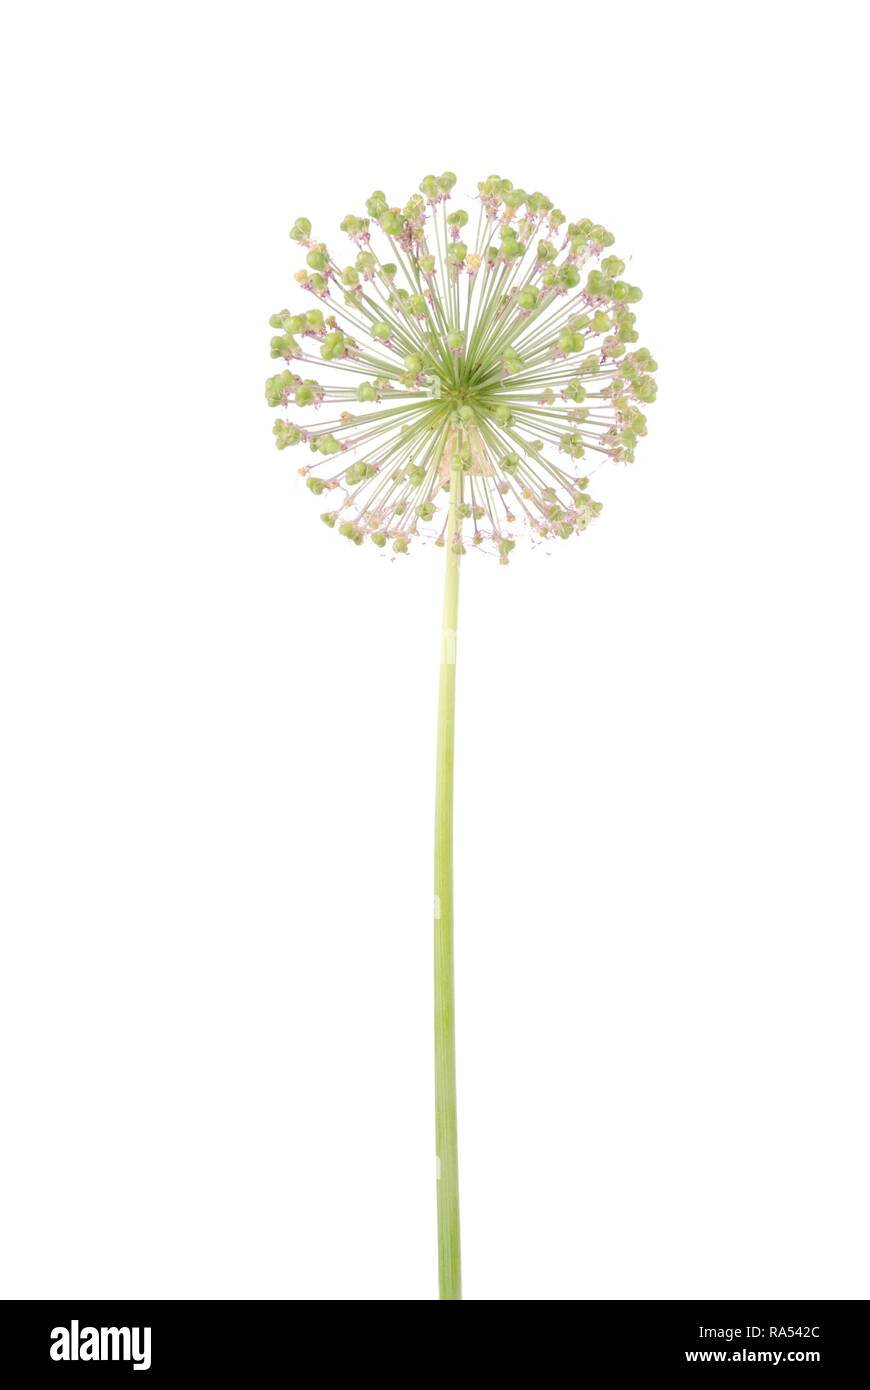 Allium flower isolated on white background Stock Photo